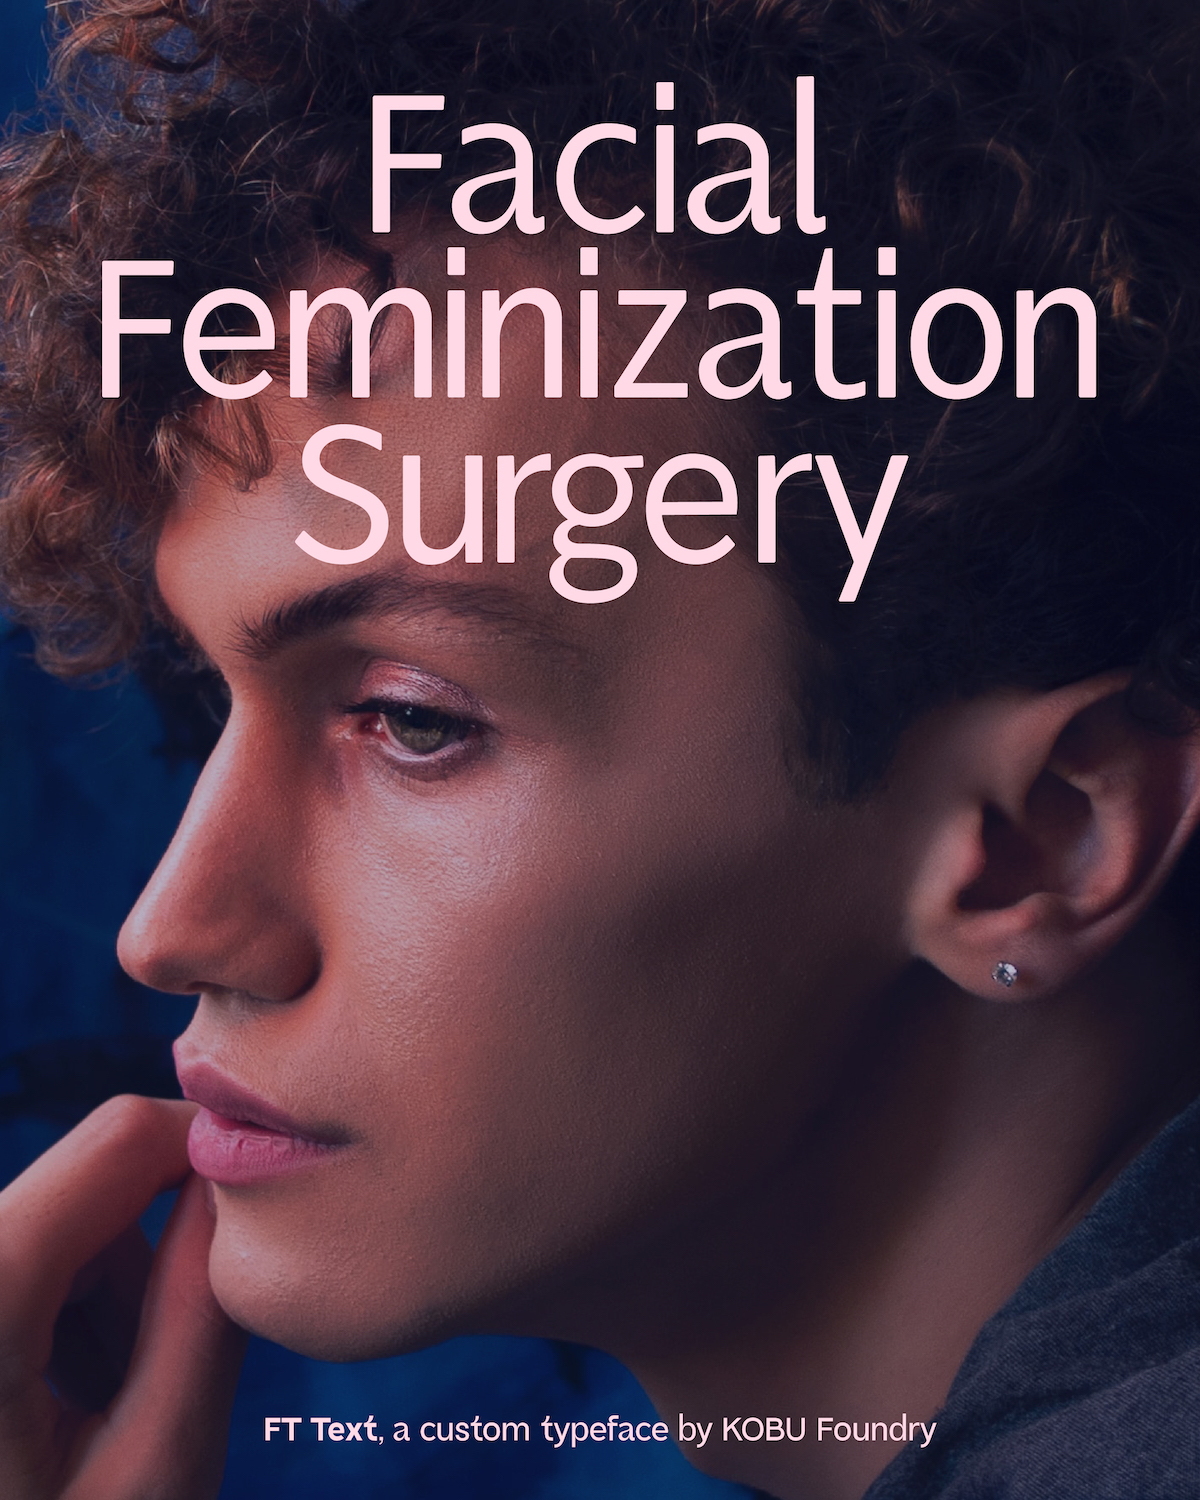 FT Text, a custom font by KOBU Foundry for Facialteam rebranding, 2022. Text reads: 'Facial Feminization Surgery' set on a portrait photograph.